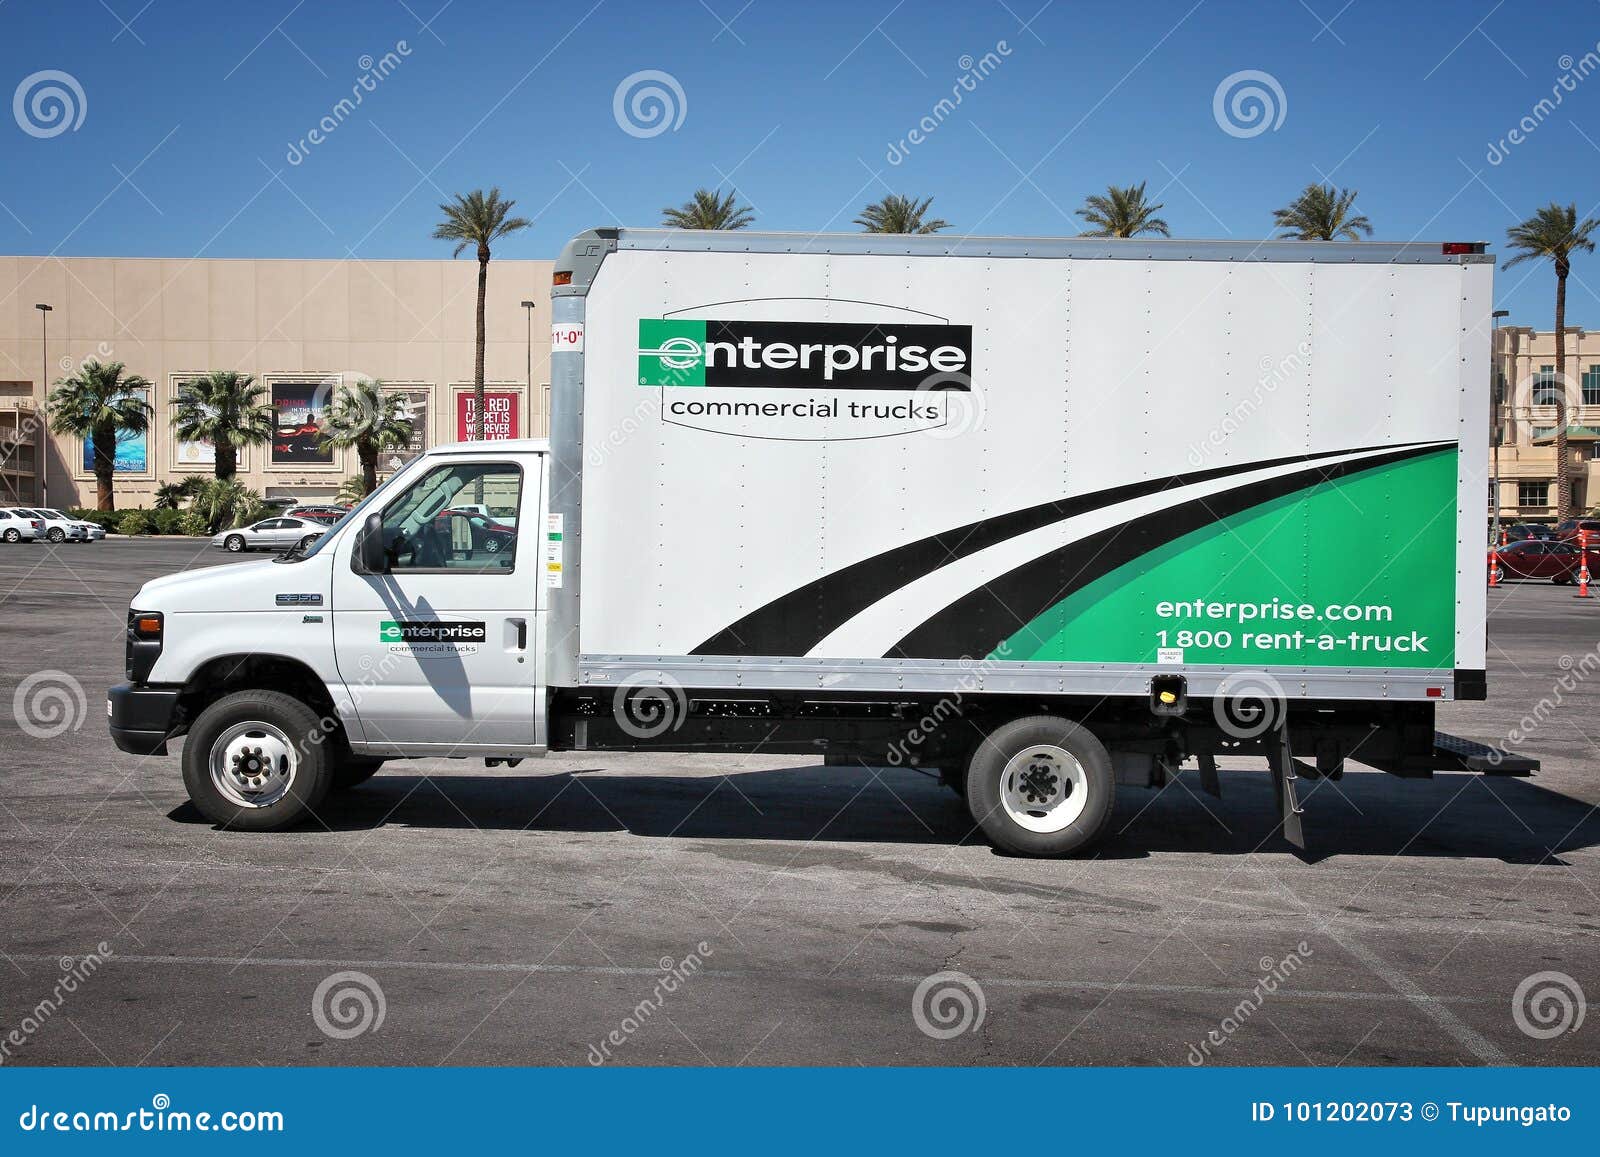 enterprise rent a truck locations